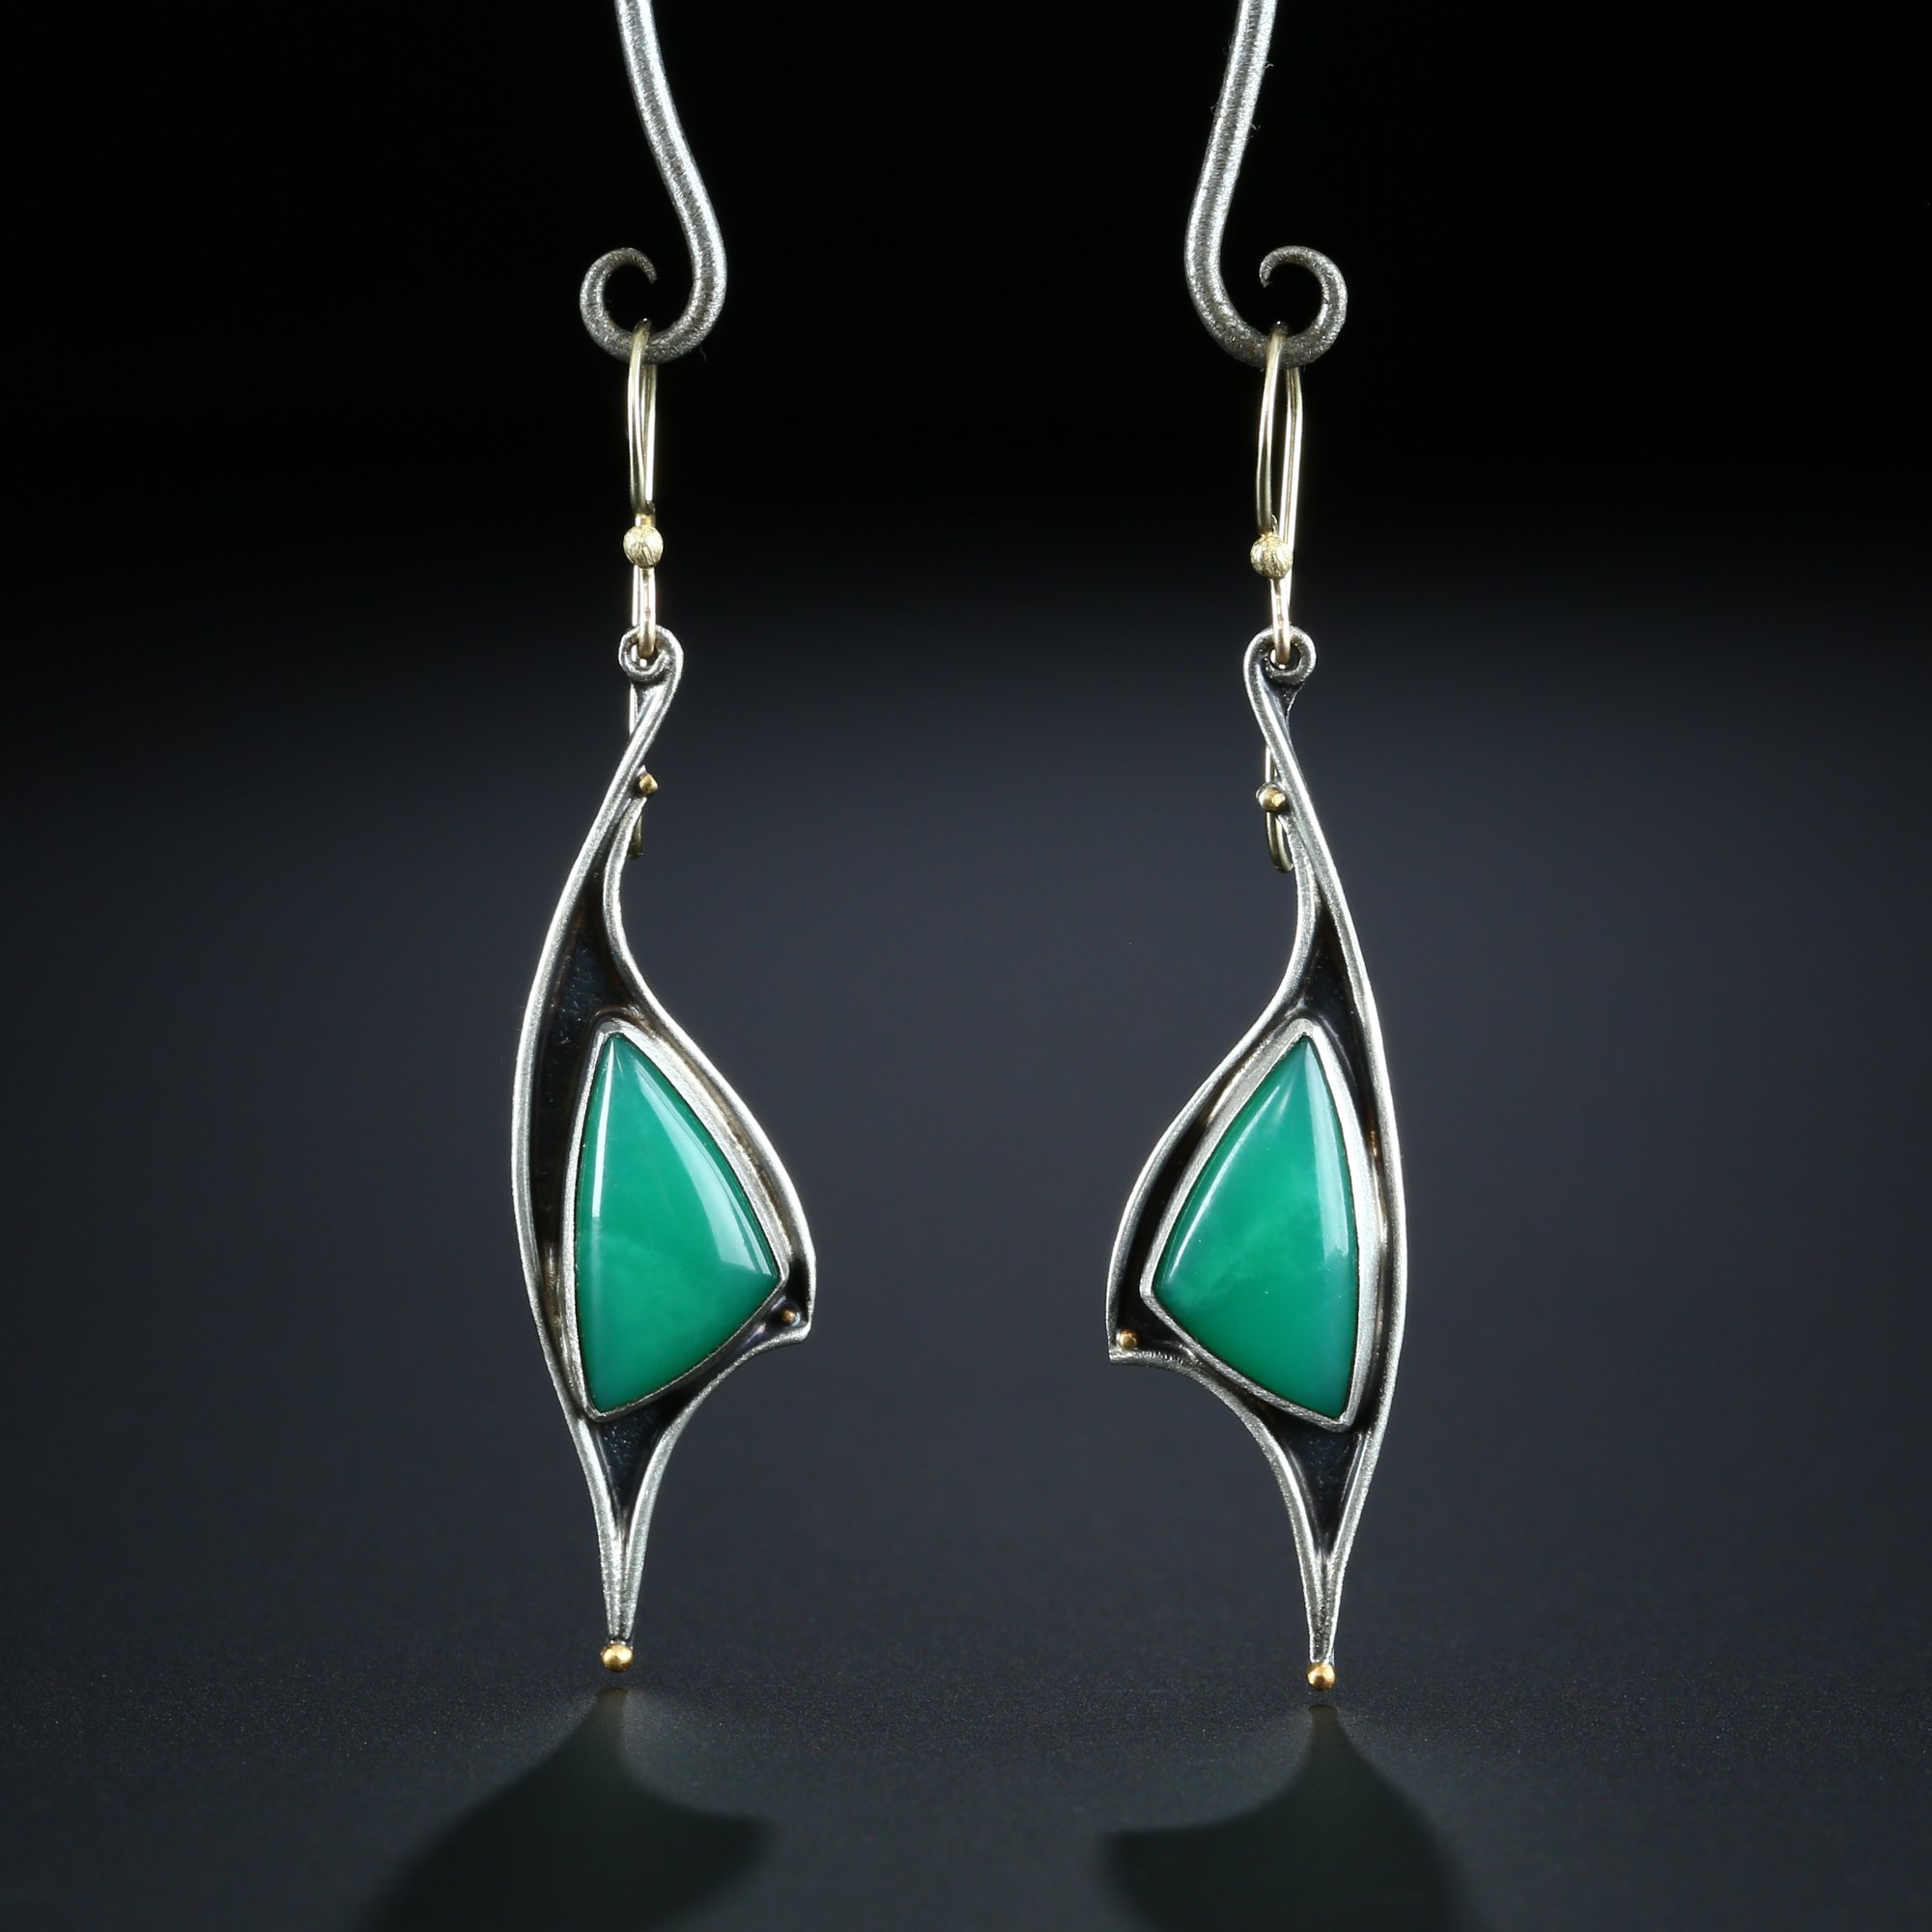 earrings — metalsmiths amy buettner & tucker glasow